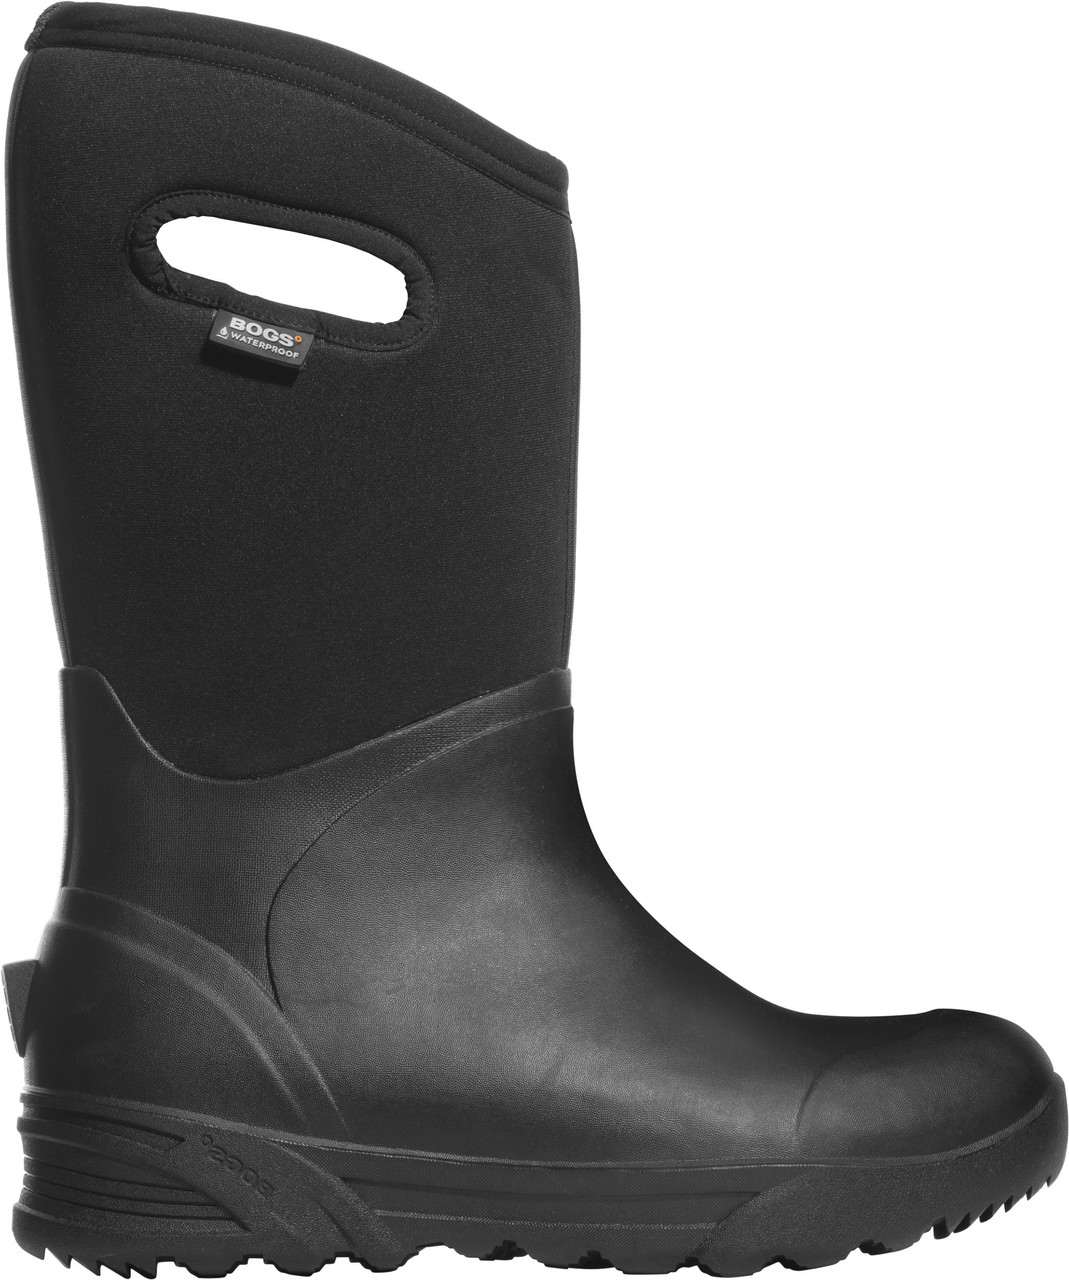 Bozeman Tall Waterproof Insulated Boots Black